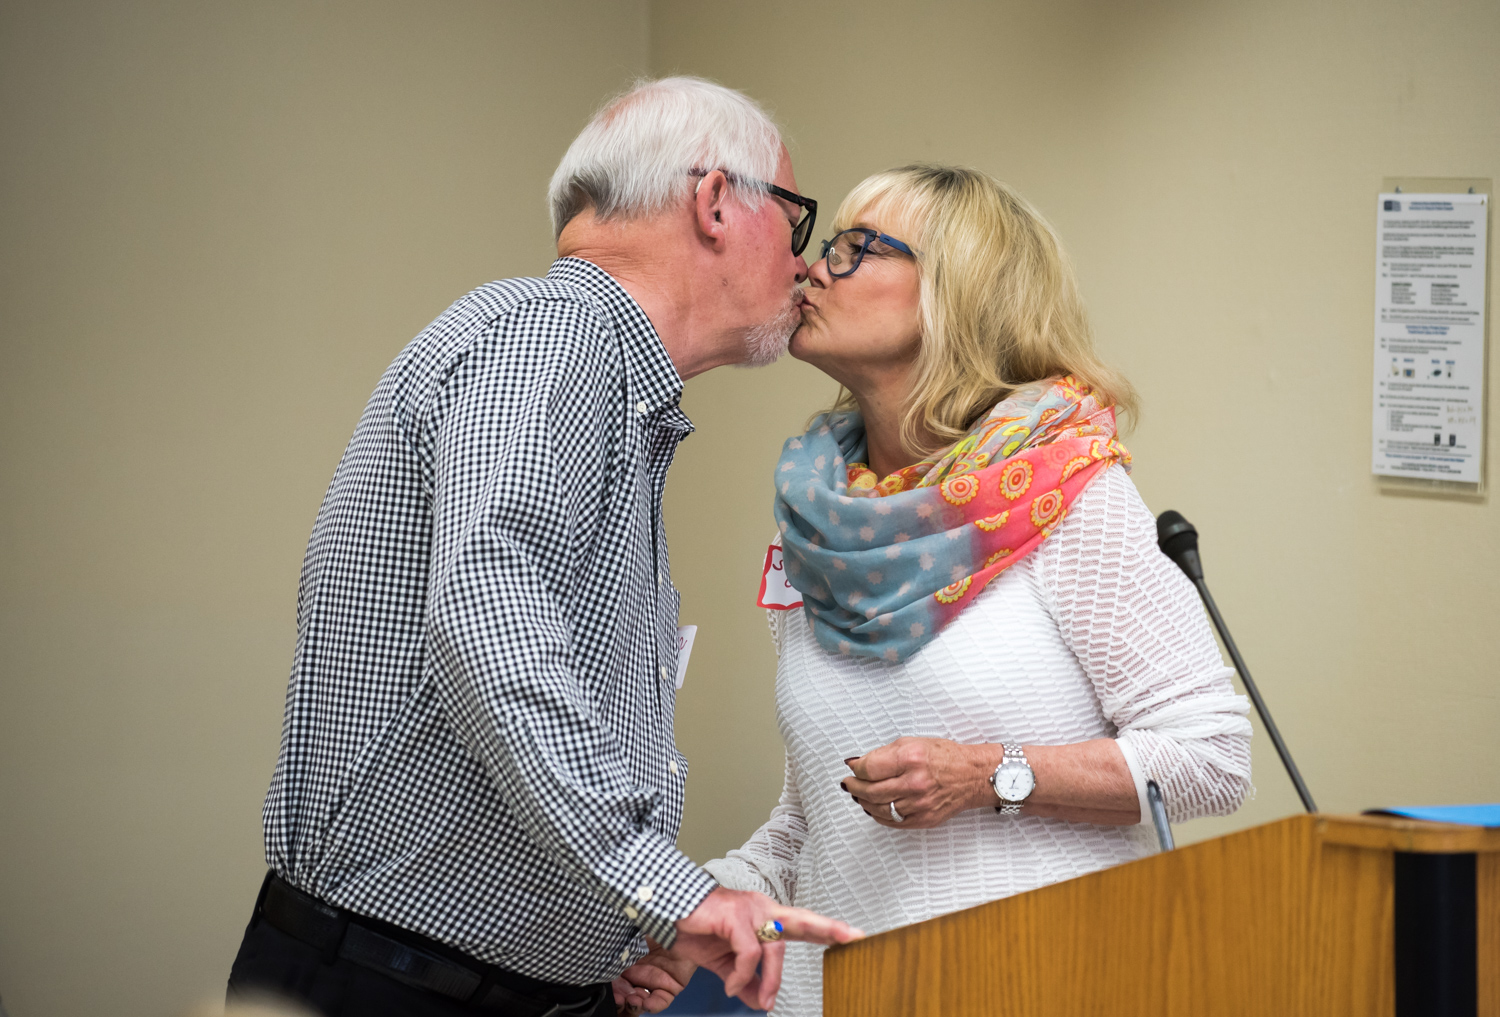 Stephen Cowen kissing his wife, Sharon